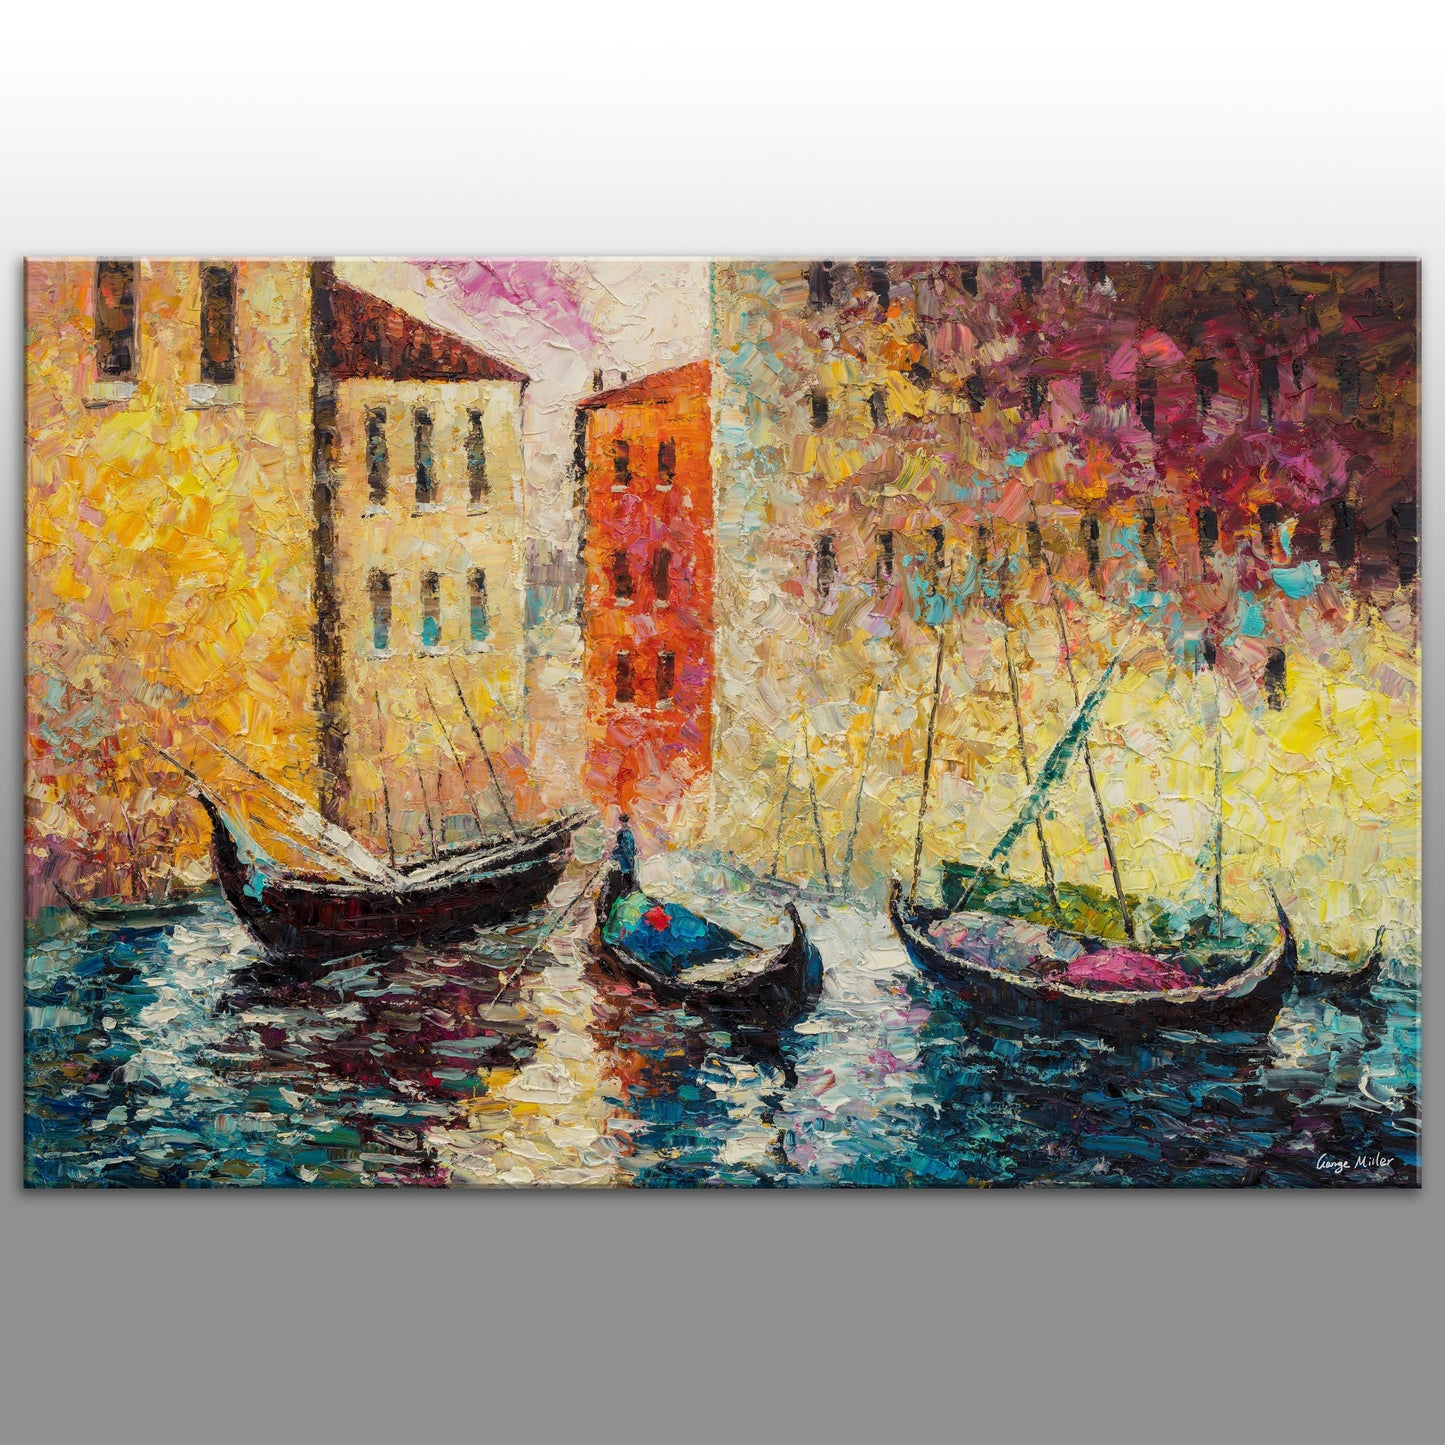 Oil Painting Venice Grand Canal Gondola Sunset, Original Abstract Painting, Abstract Painting, Large Landscape Painting, Living Room Decor